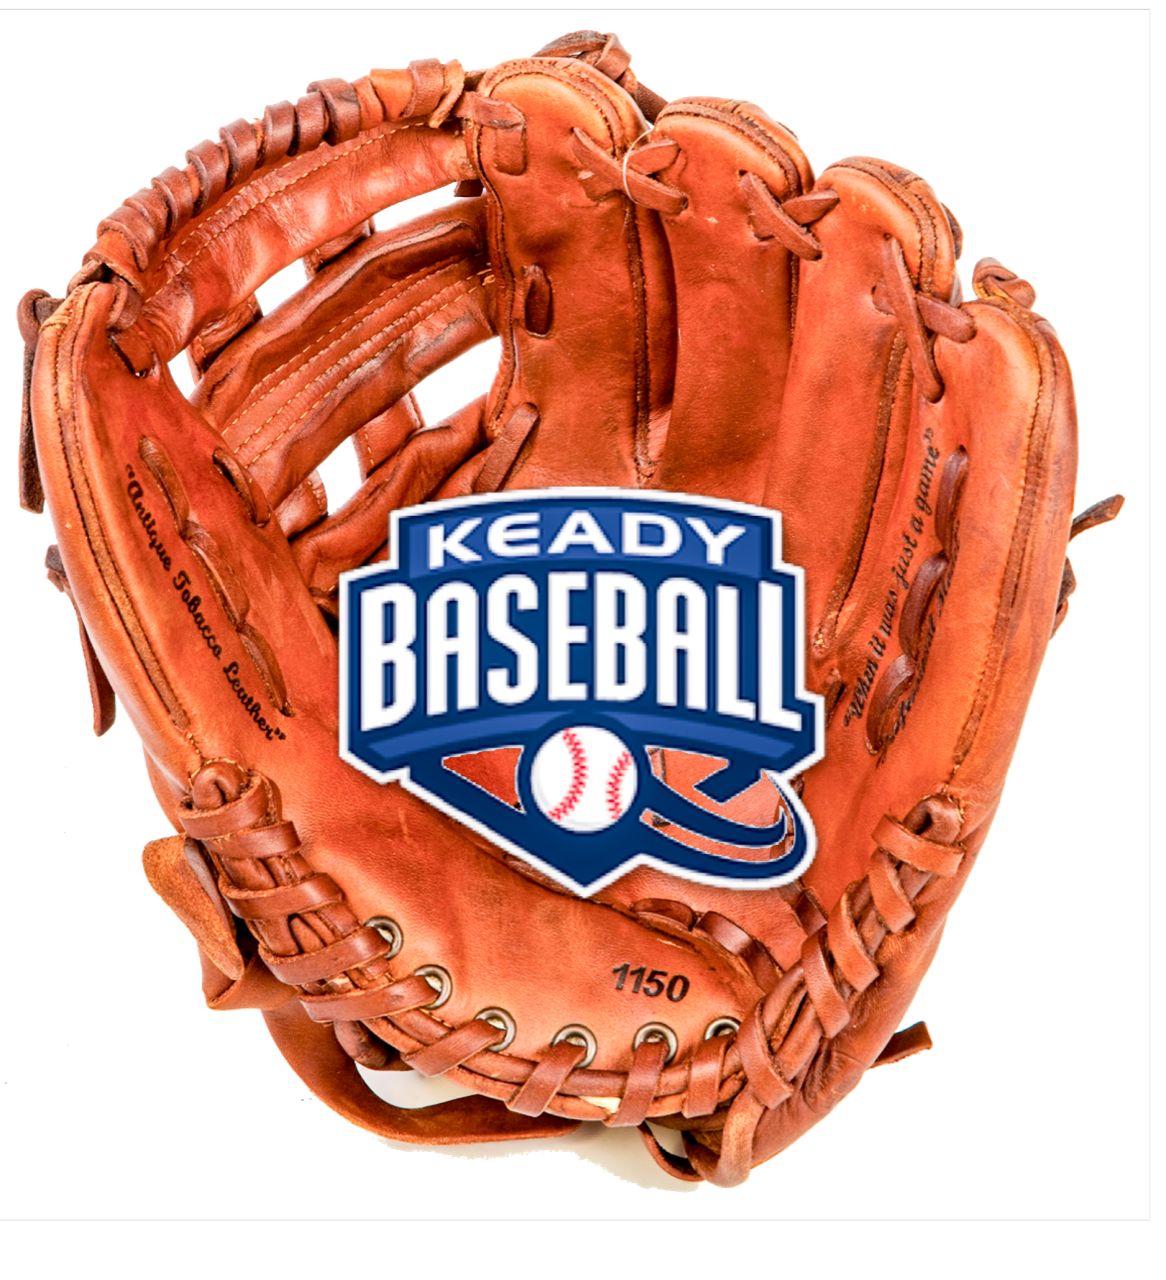 Keady Baseball Professional Baseball Development